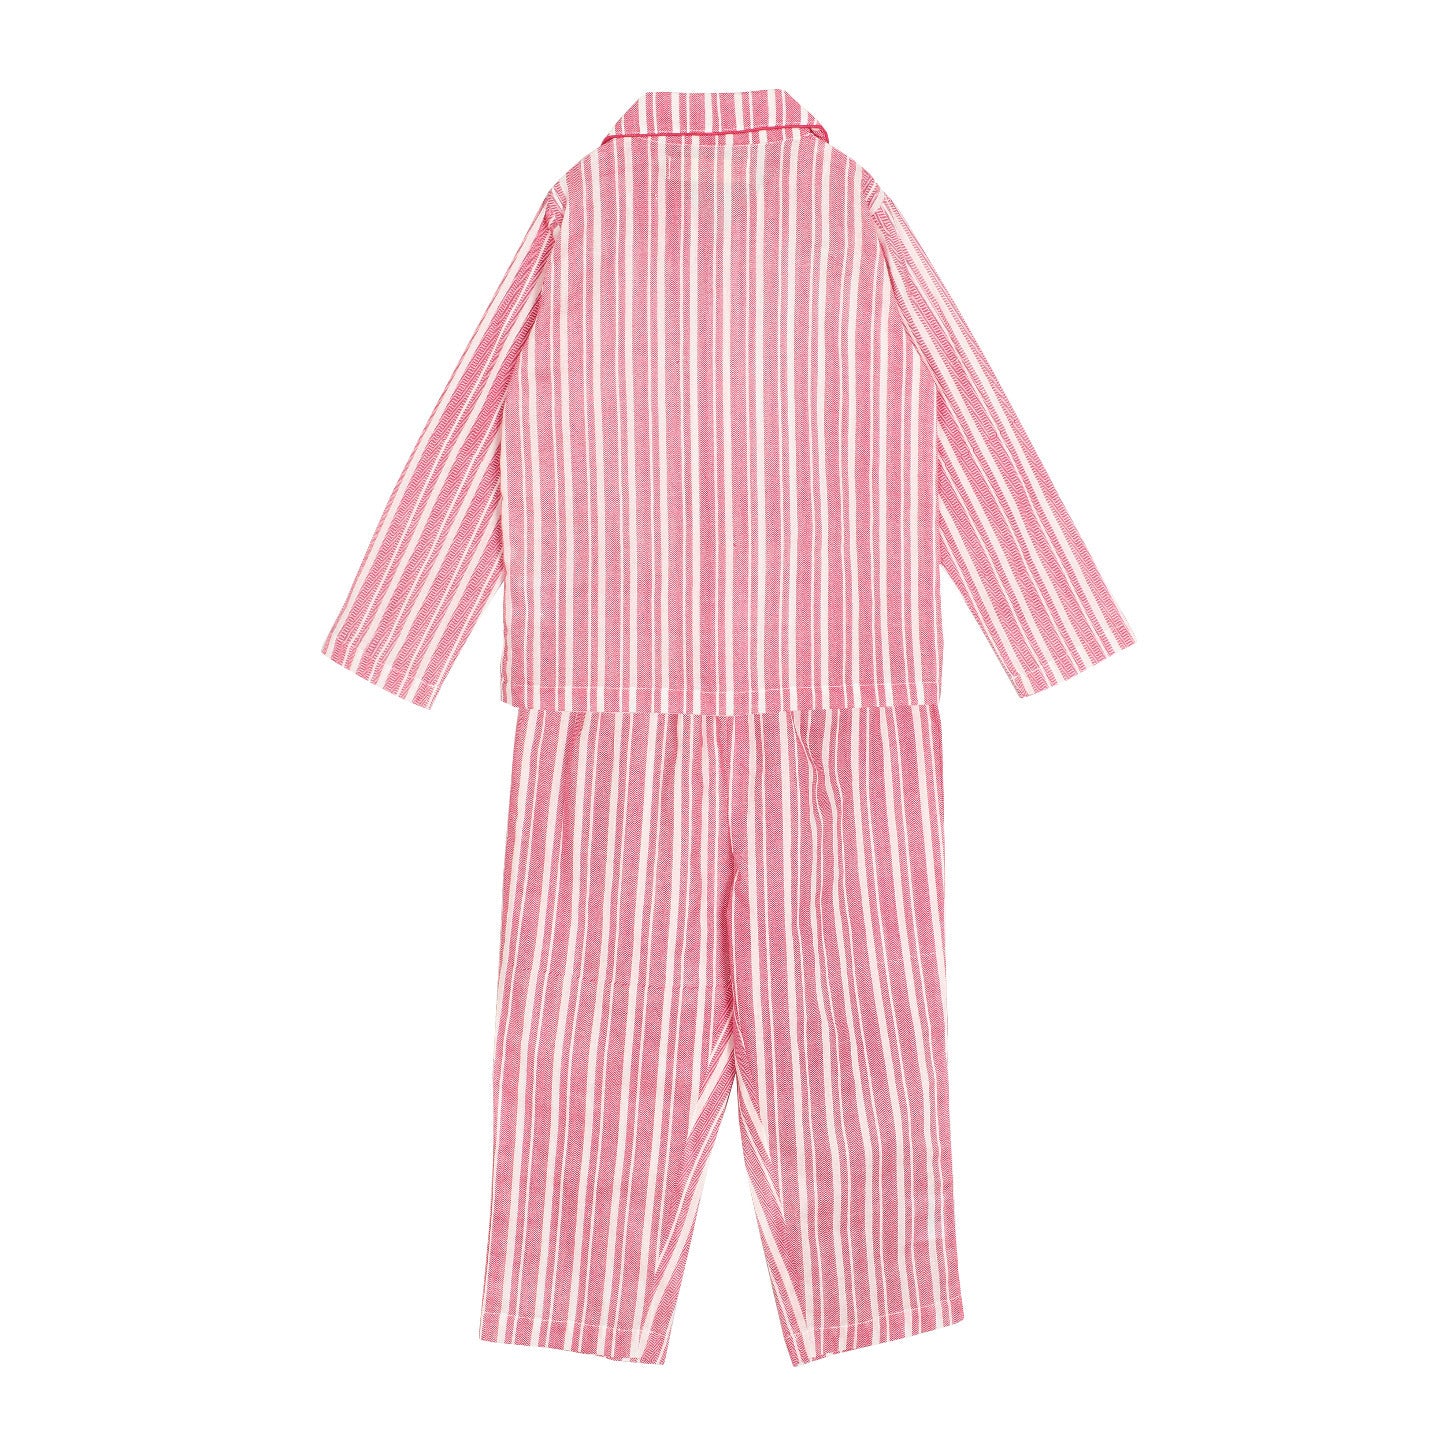 Printed Girl's Night Suit Set Chevron Stripes Pink